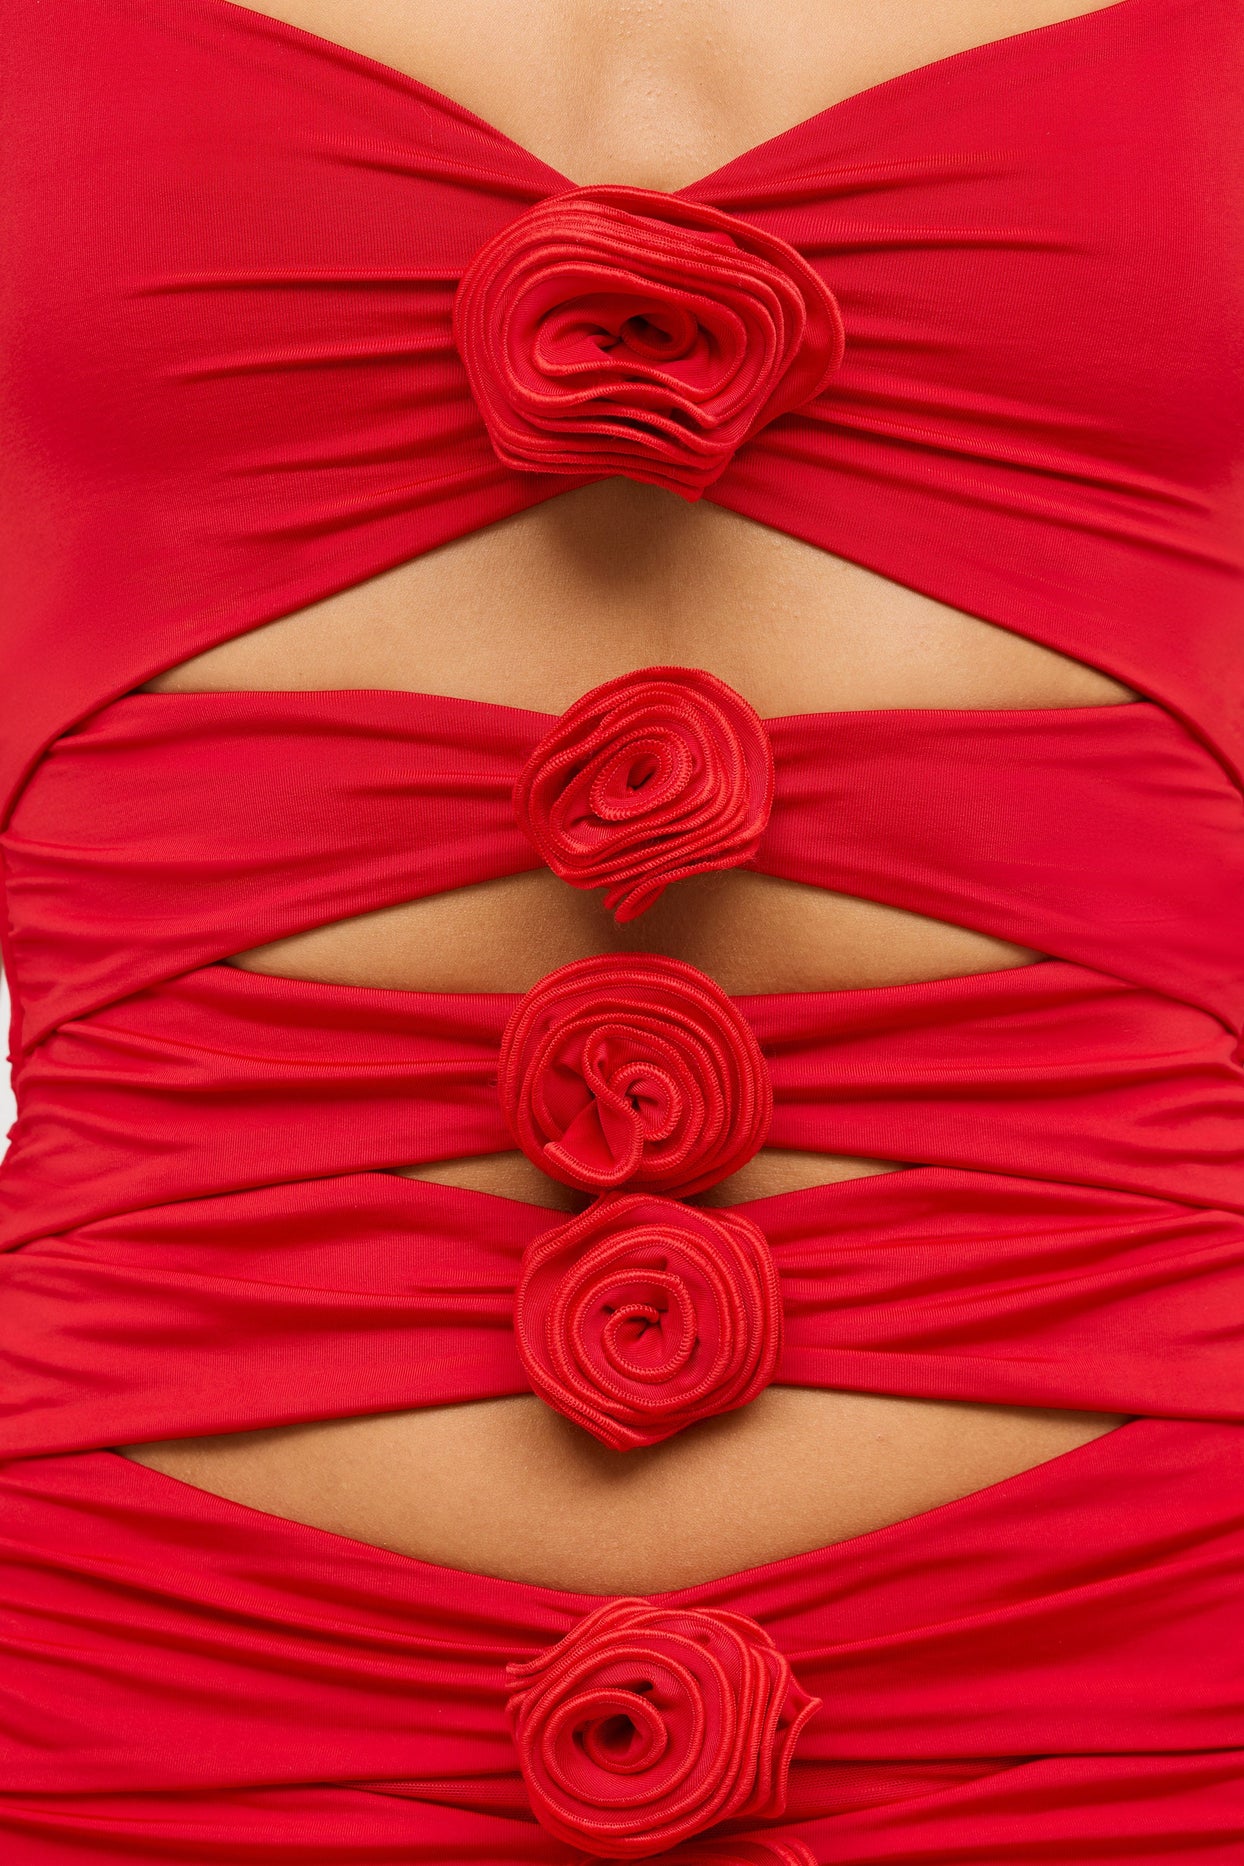 Slinky Jersey Rose Detail Cut Out Mini Dress in Scarlet Red